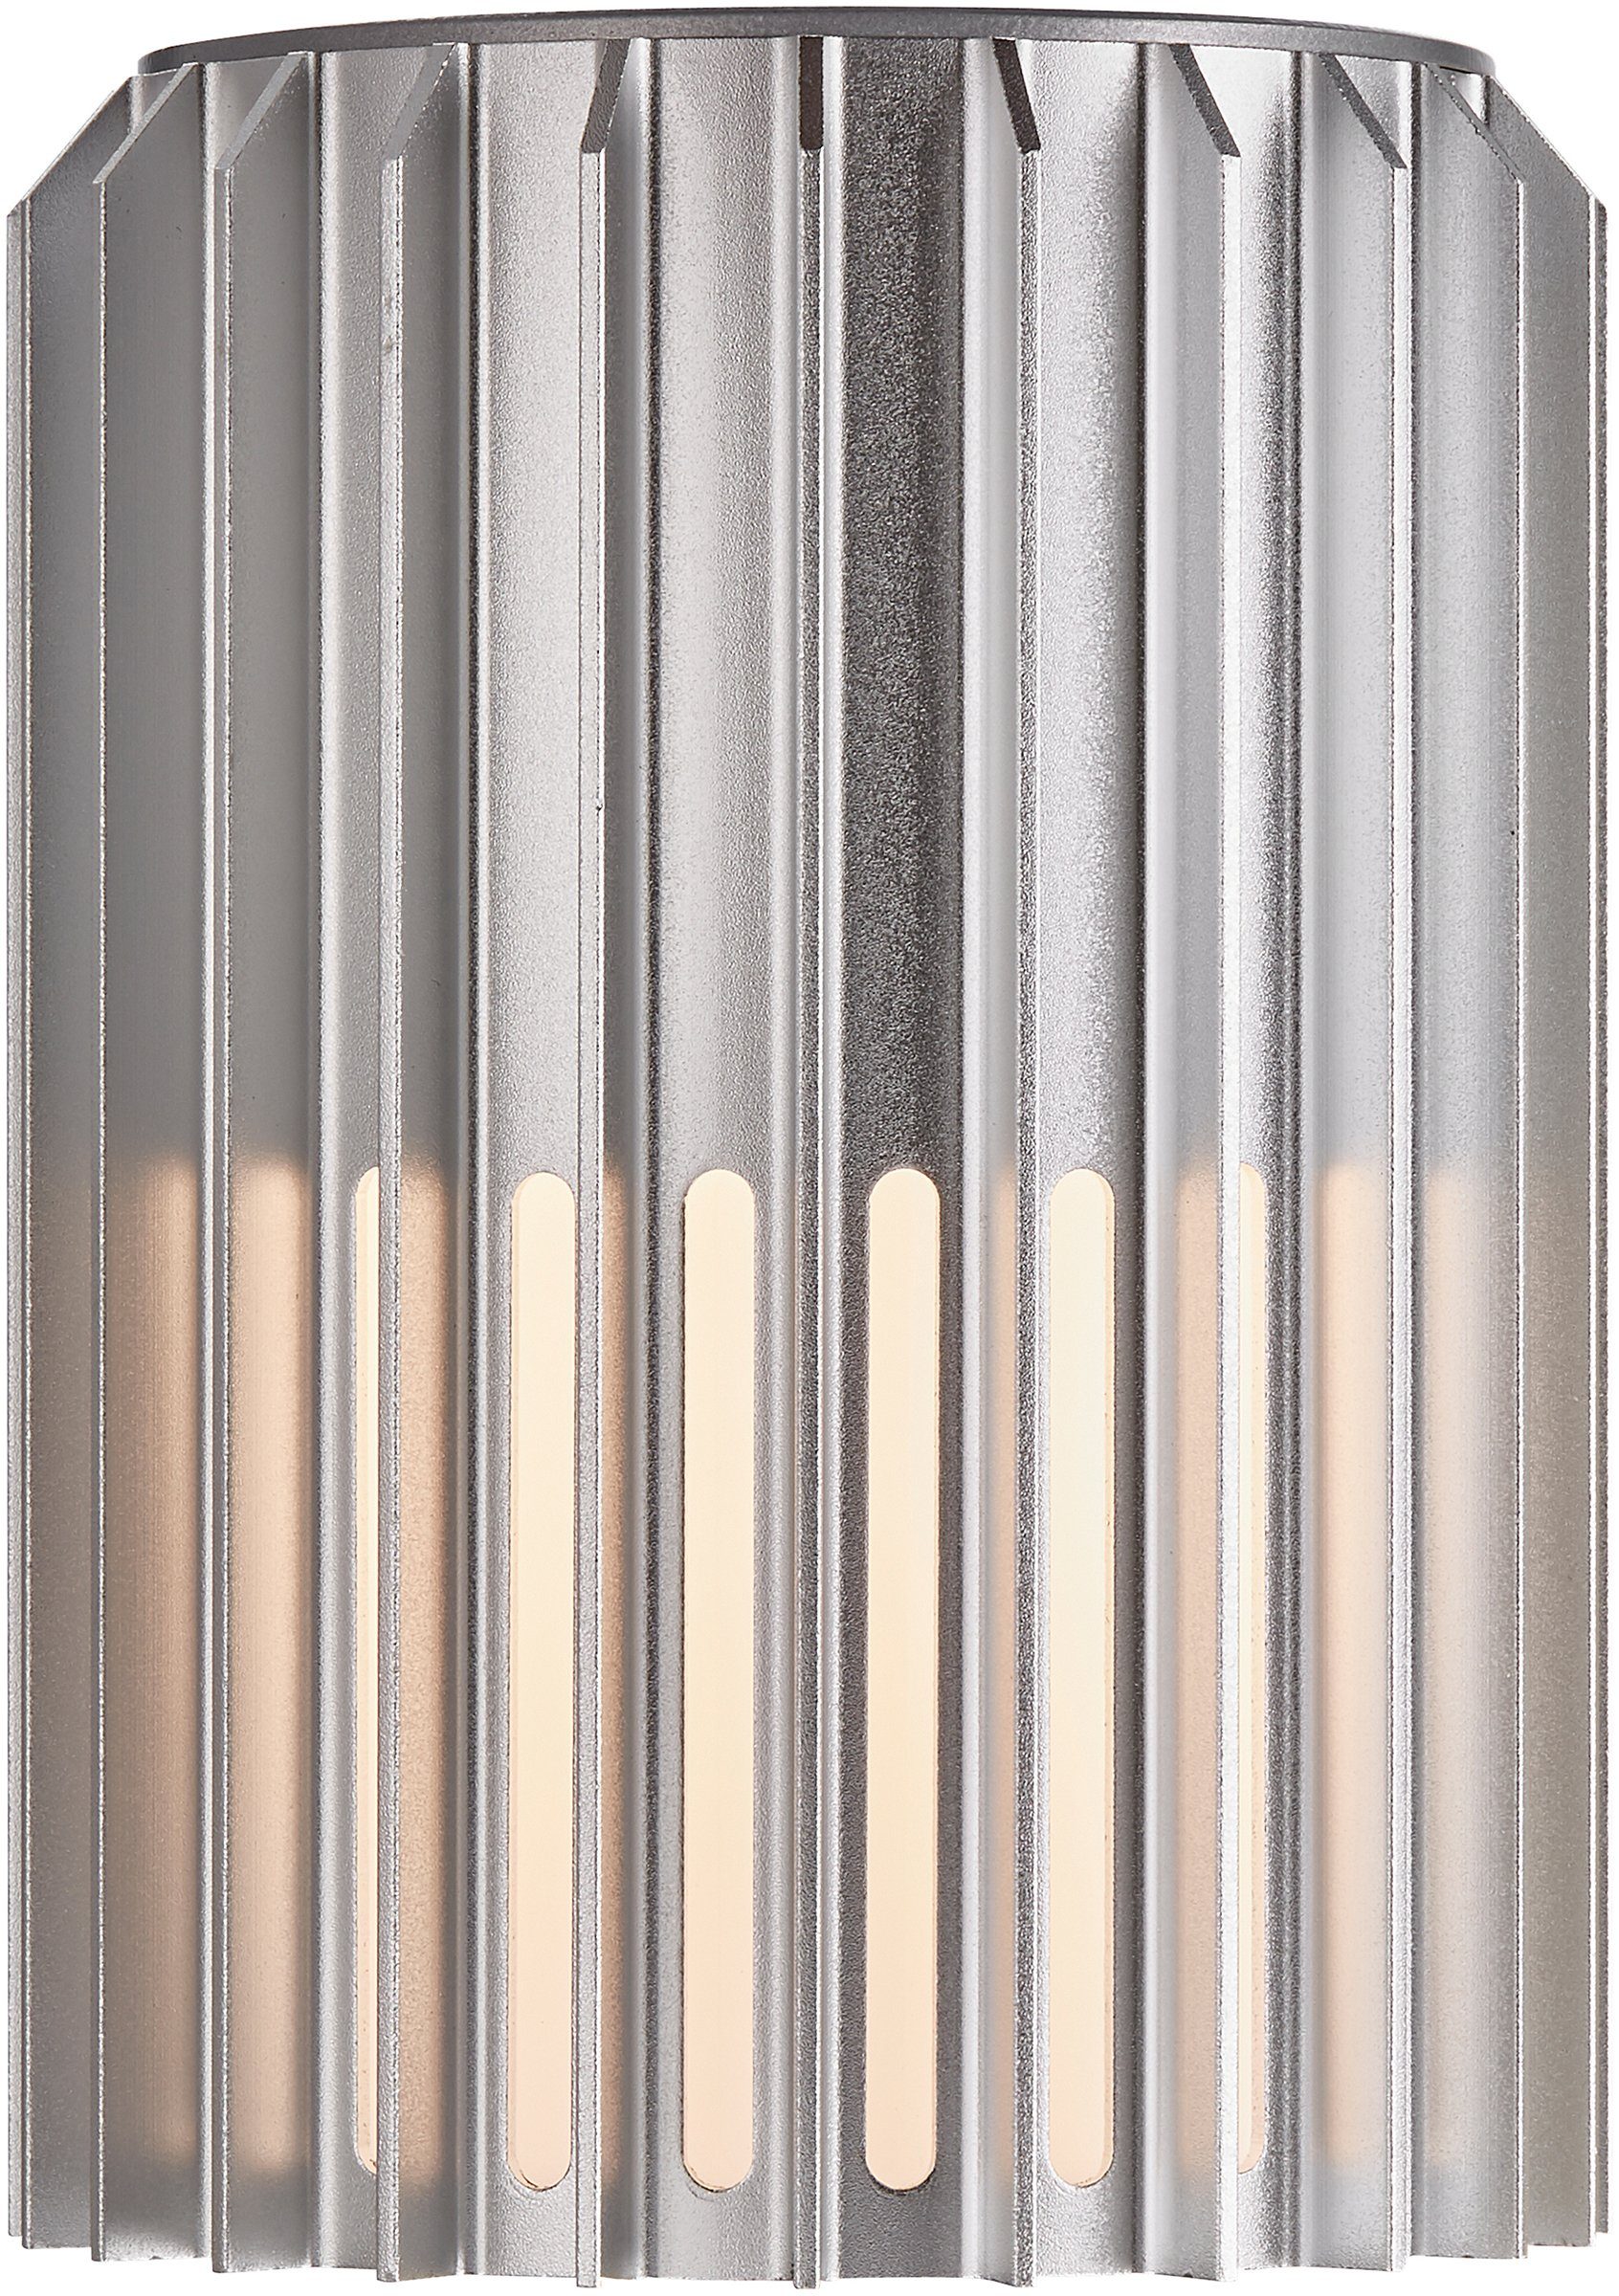 eloxiertem Aluminium, Nordlux Leuchtmittel, Aludra, langlebigem eloxiertes robustem aus langlebiges Aluminium ohne Wandleuchte